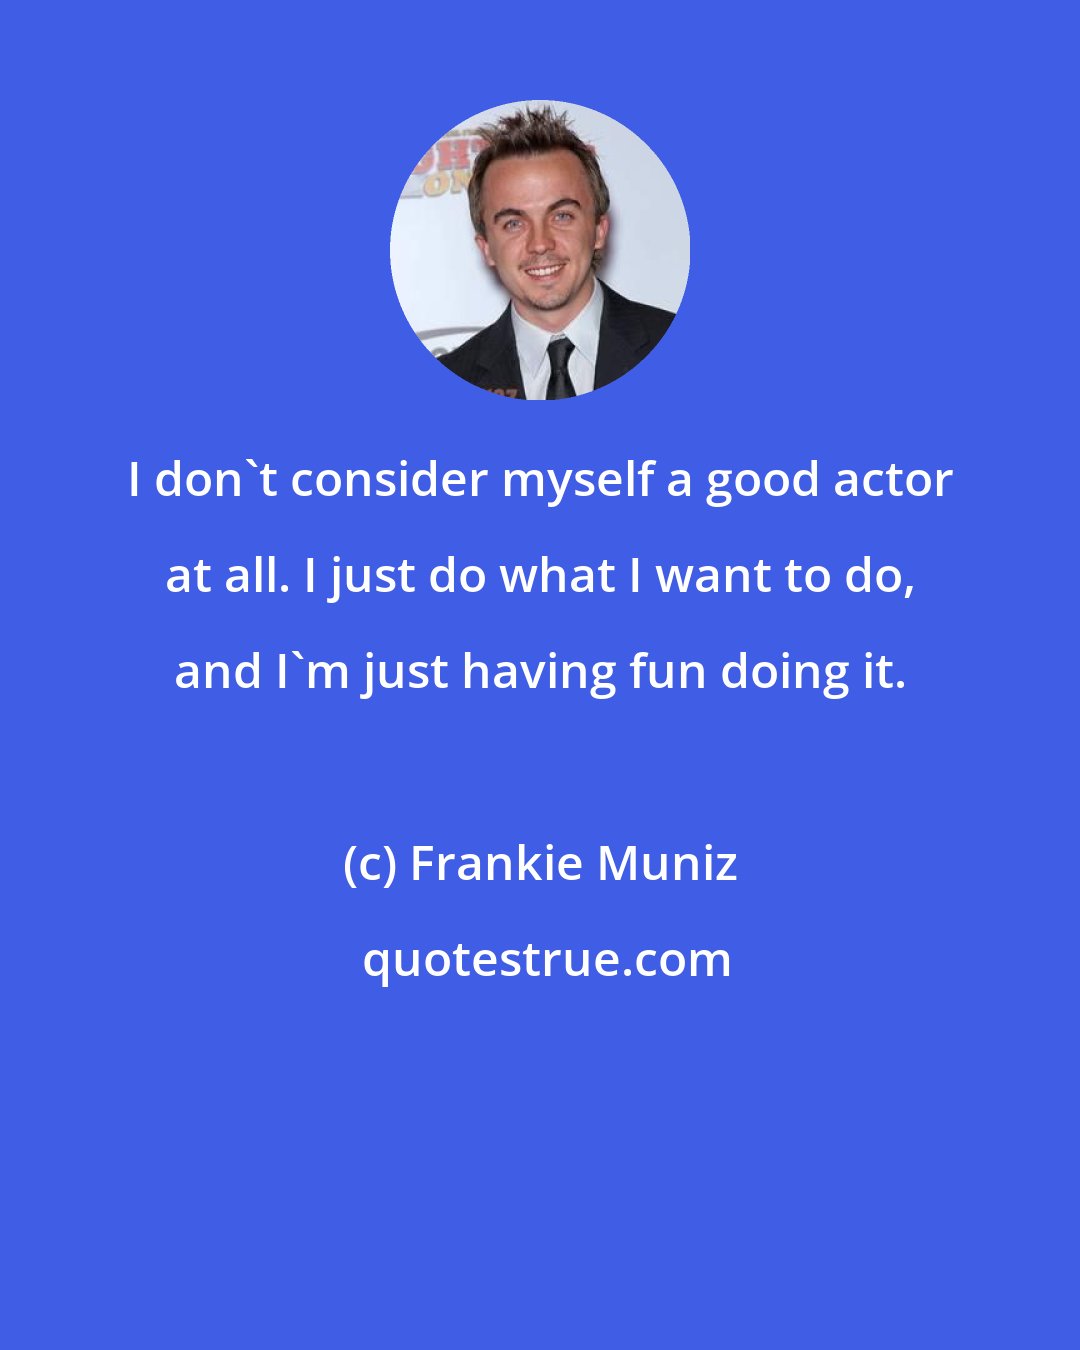 Frankie Muniz: I don't consider myself a good actor at all. I just do what I want to do, and I'm just having fun doing it.